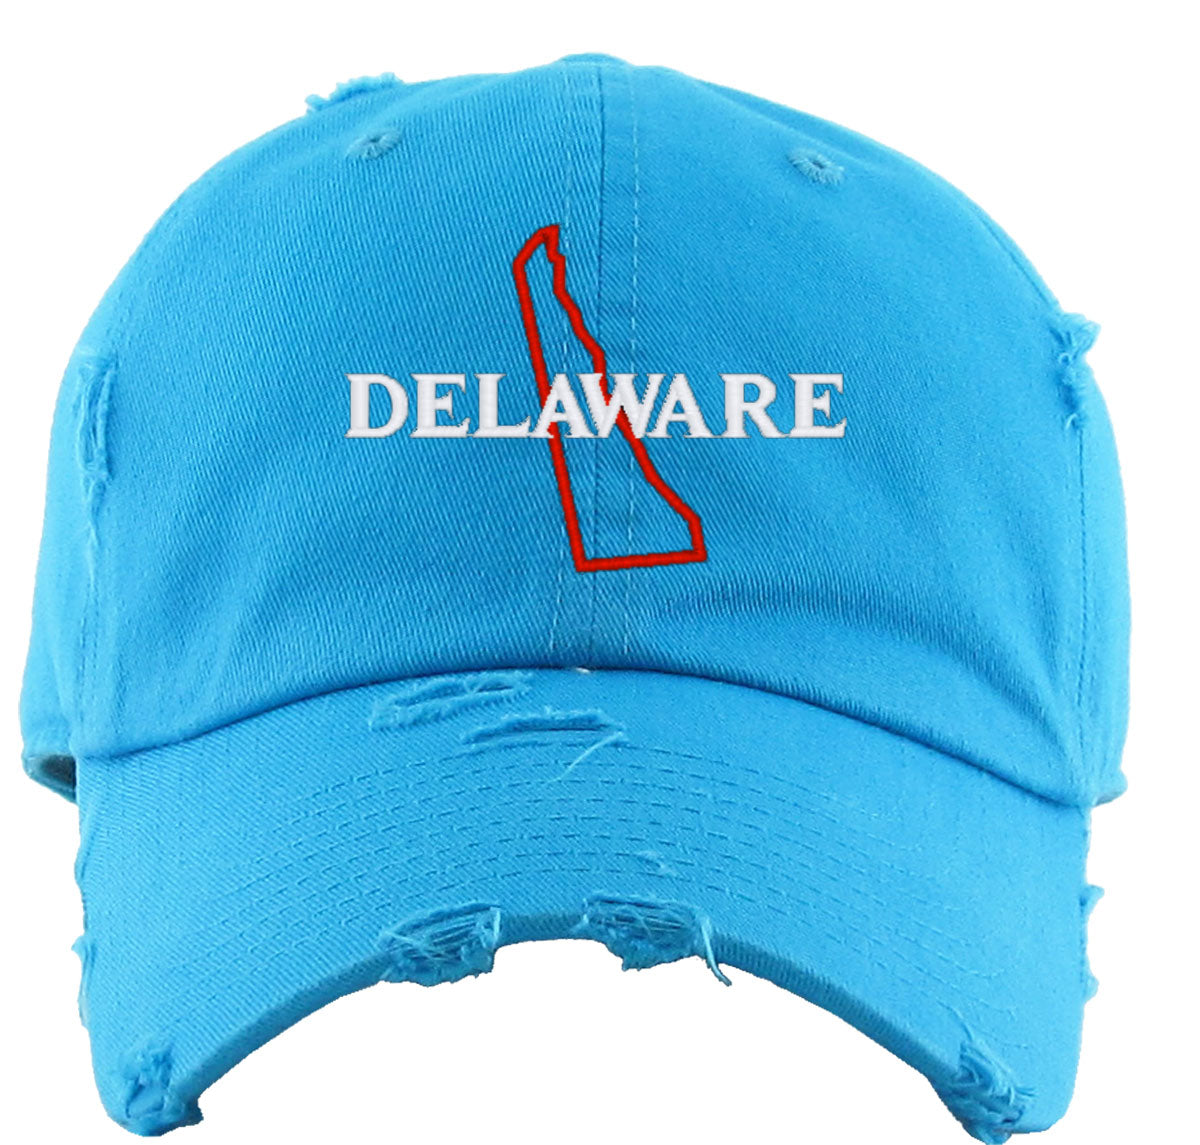 Delaware Vintage Baseball Cap